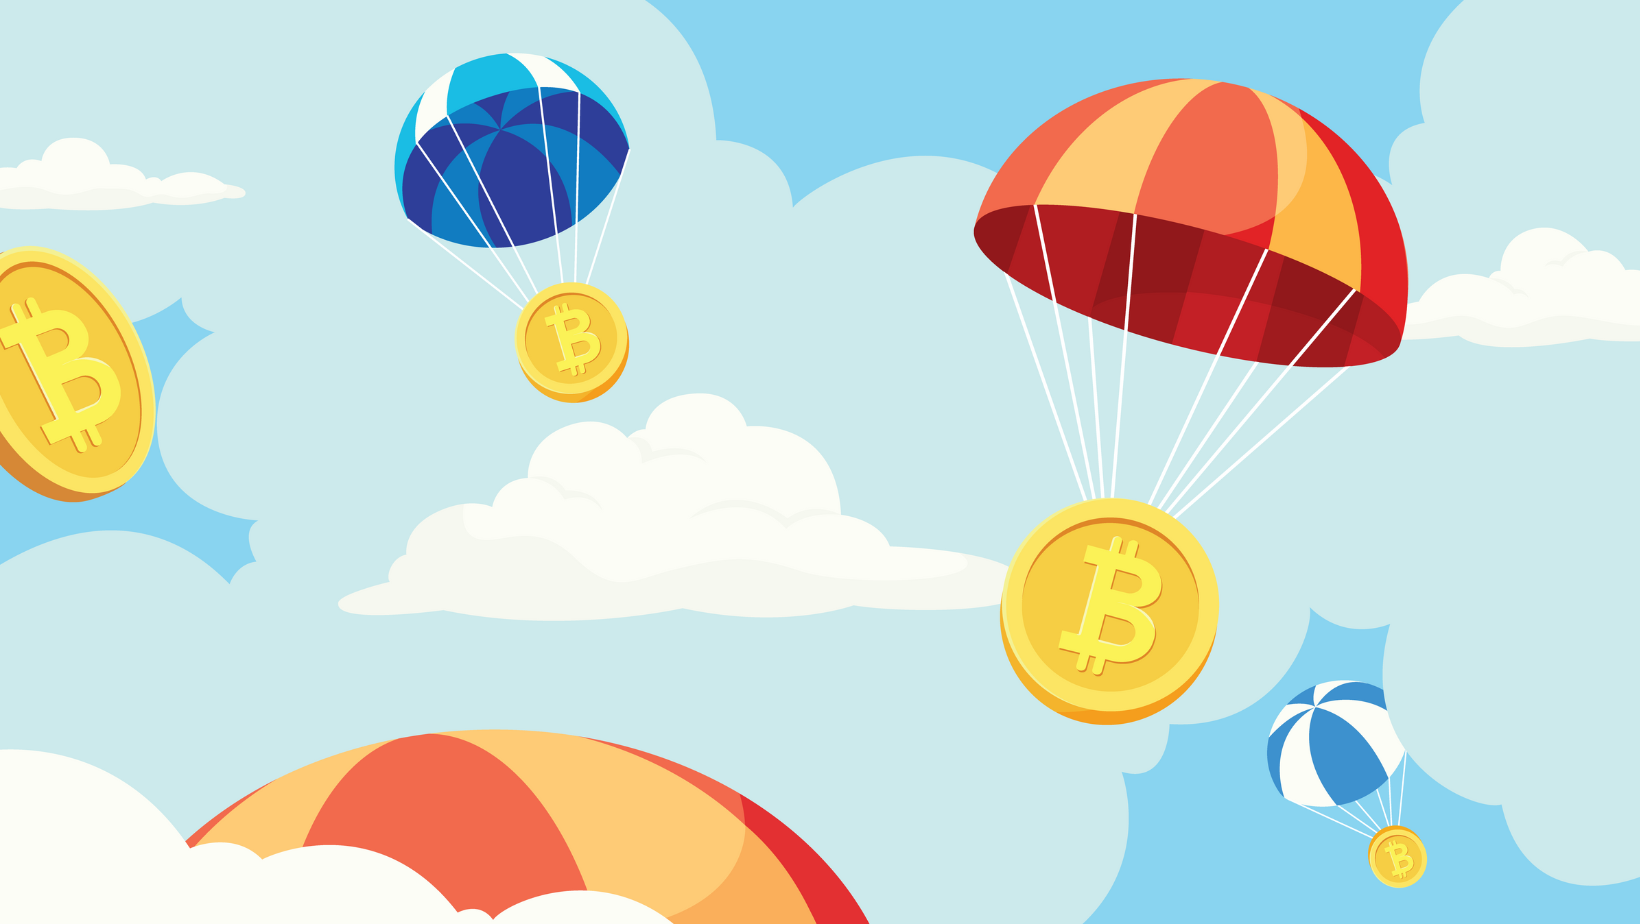 ZKsync will distribute billions of tokens via airdrop